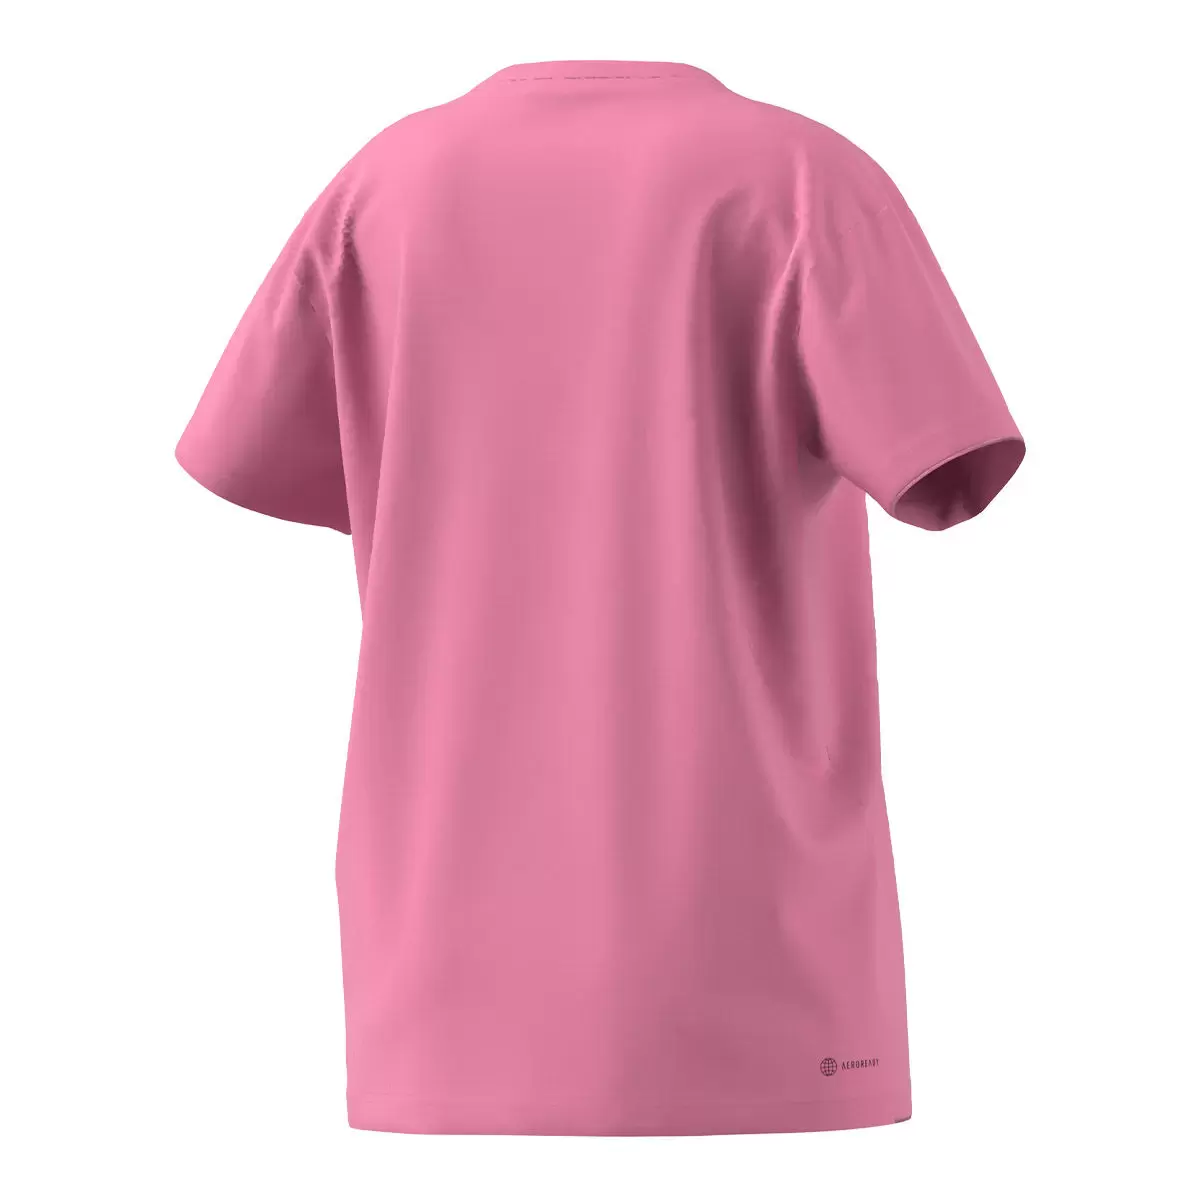 Adidas 女圓領短袖上衣 粉紅